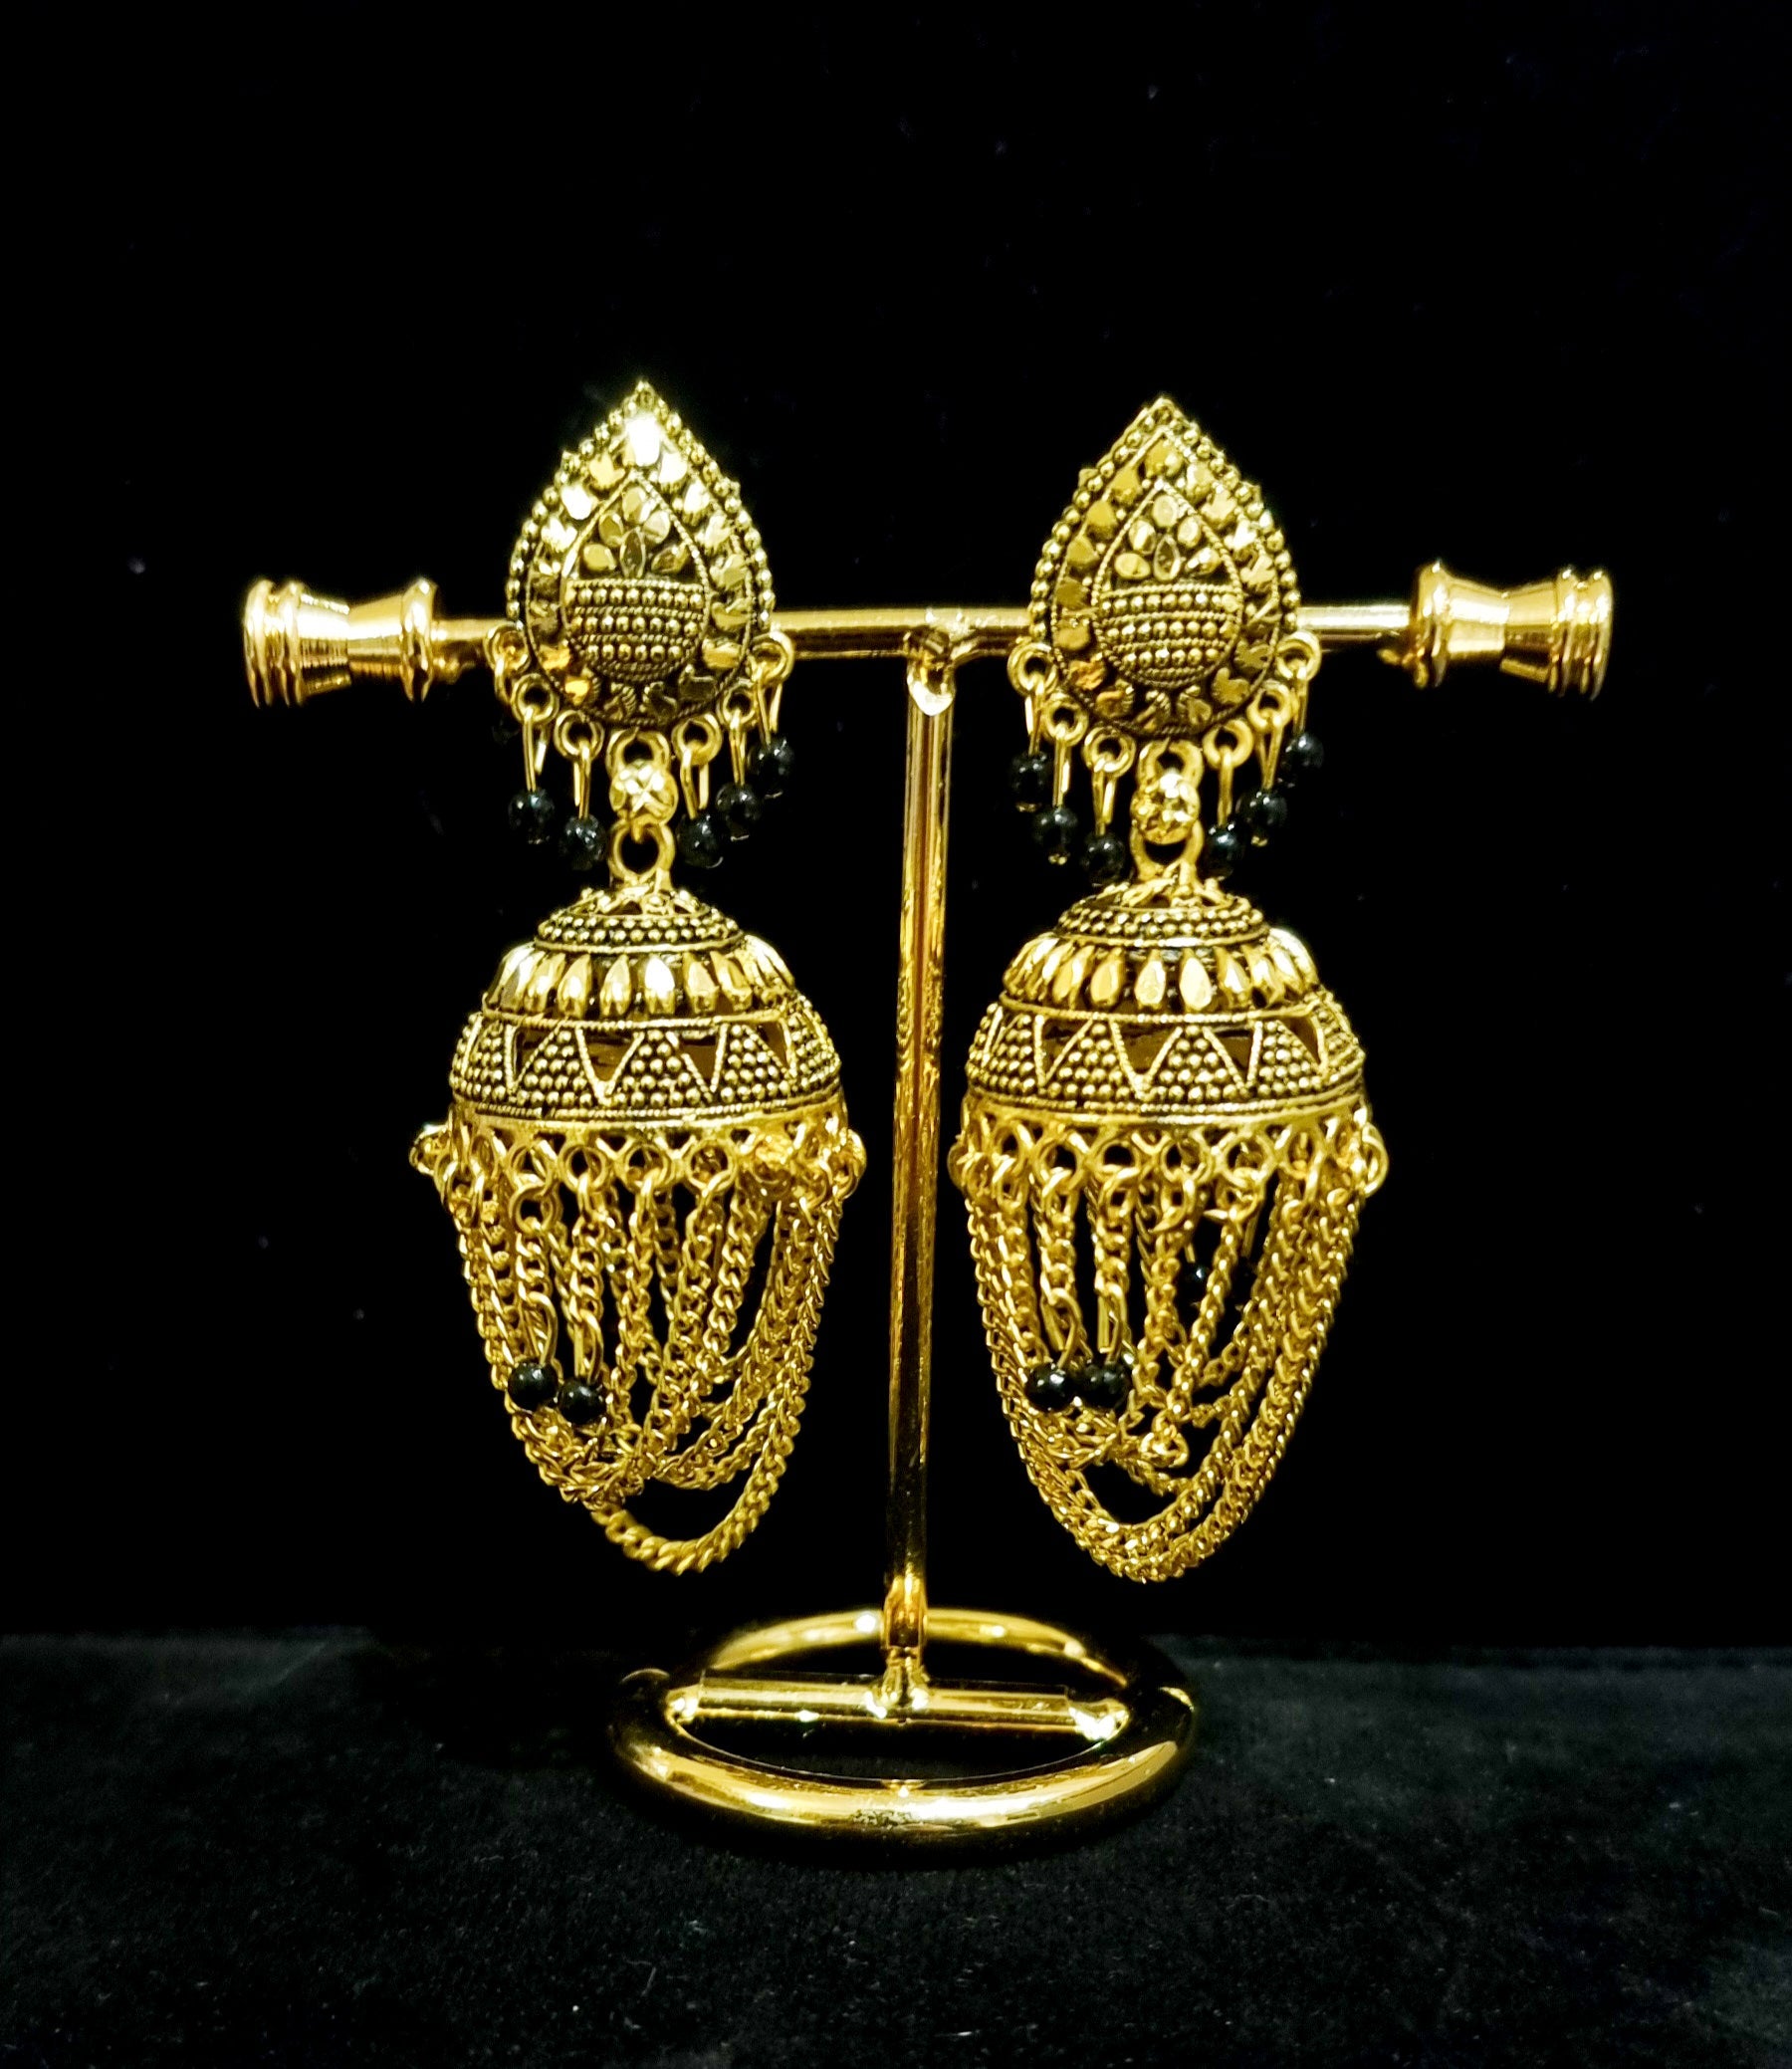 Copper gold matte finish antique earrings.